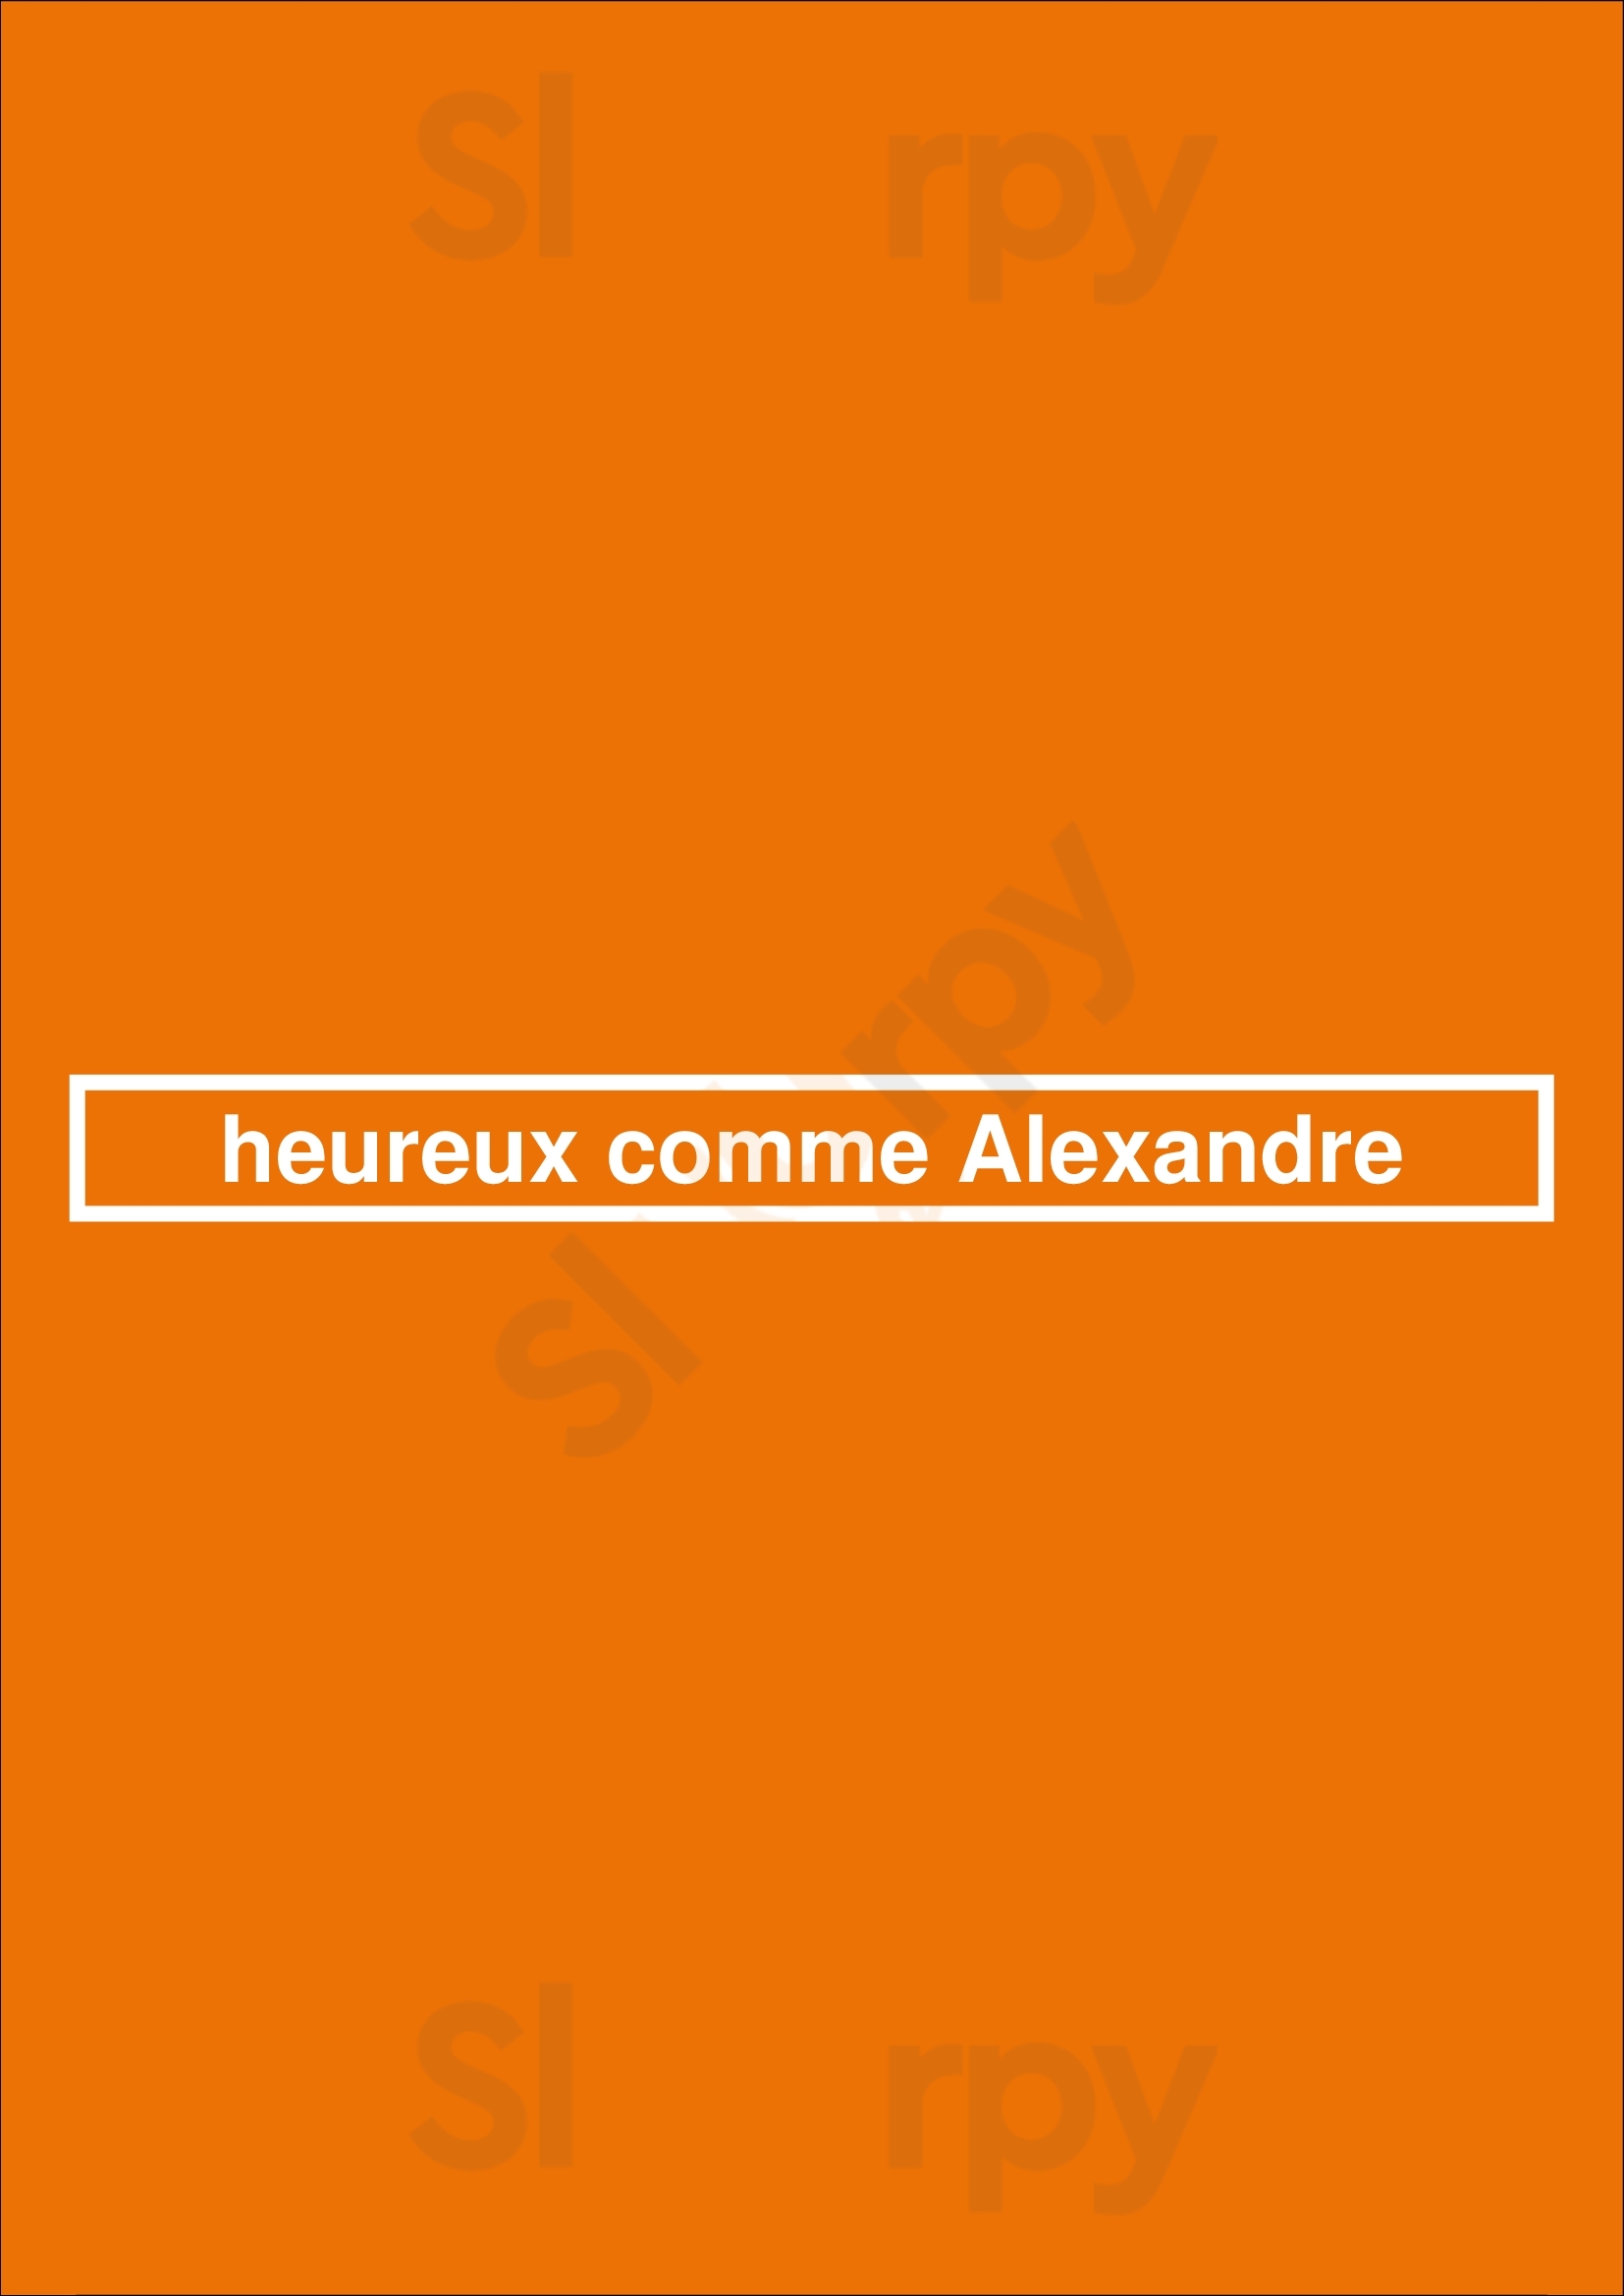 Heureux Comme Alexandre Metz Menu - 1